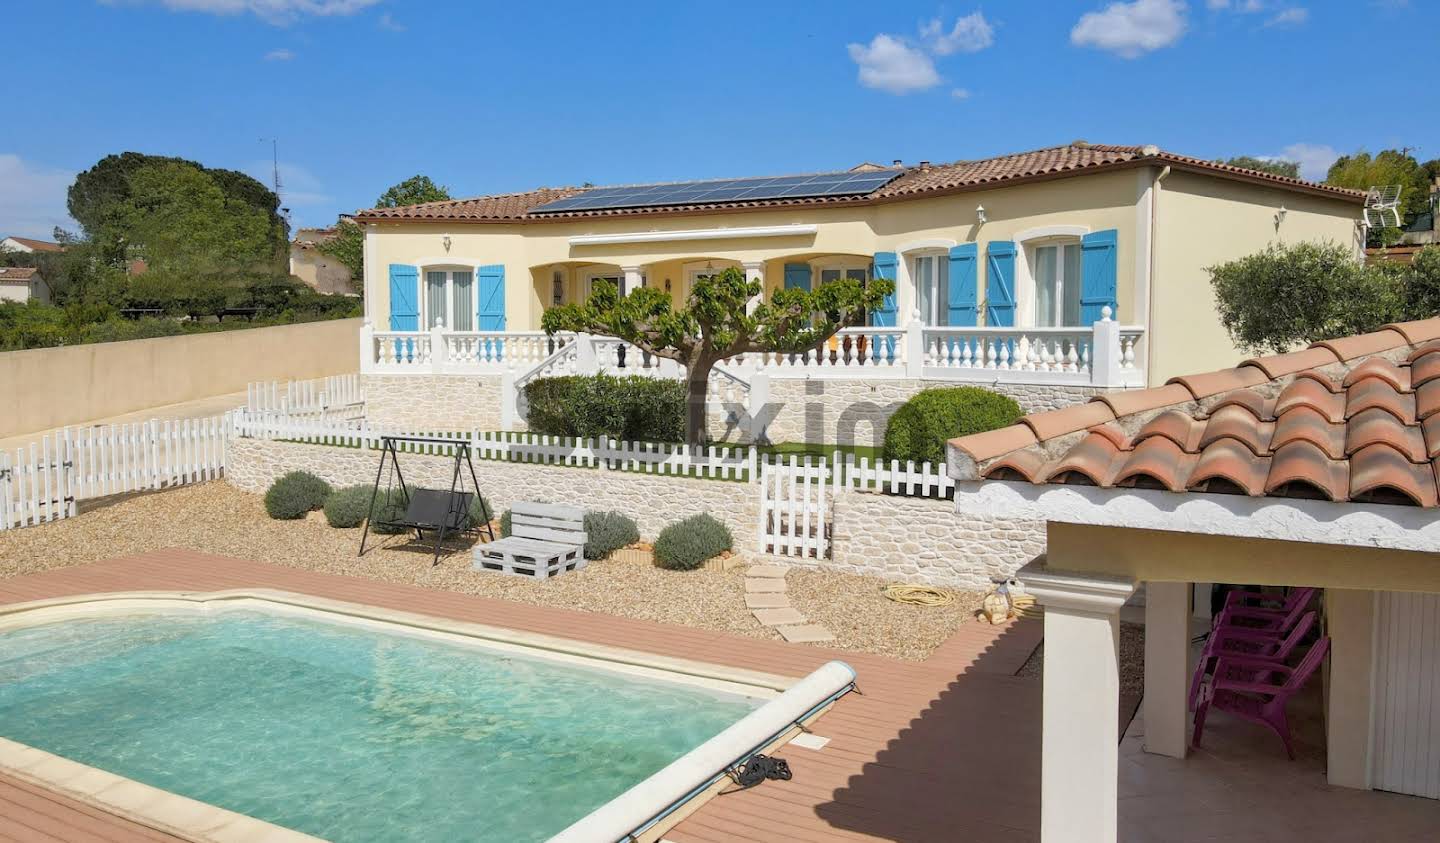 Villa with pool and terrace Avignon